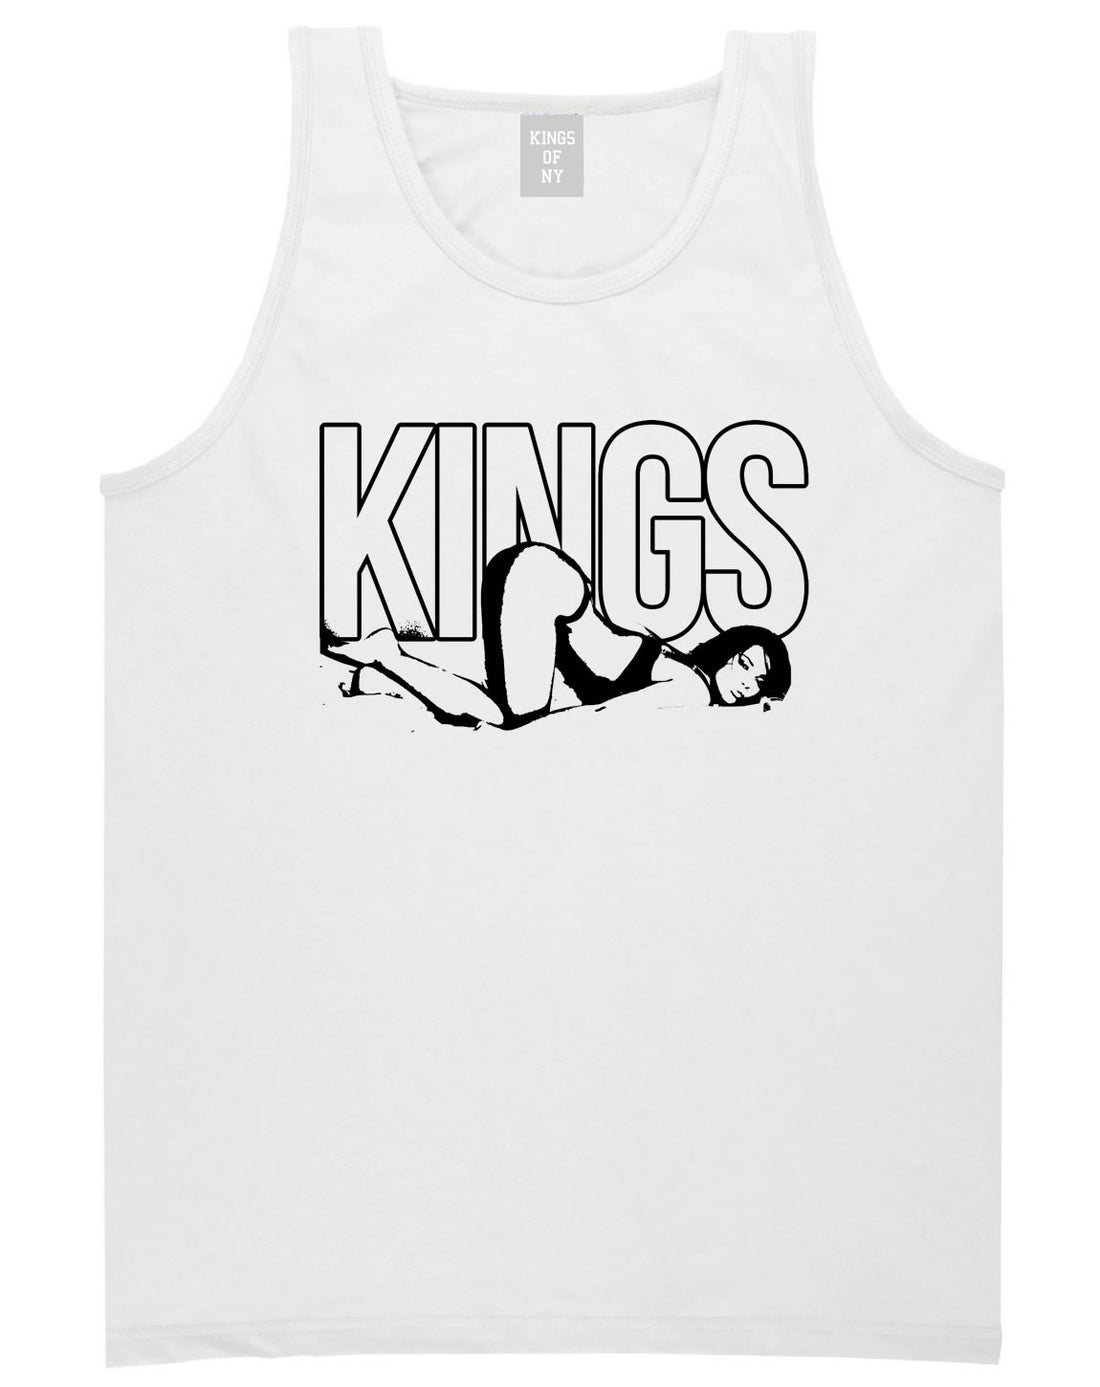 Kings Girl Streetwear Tank Top in White by Kings Of NY